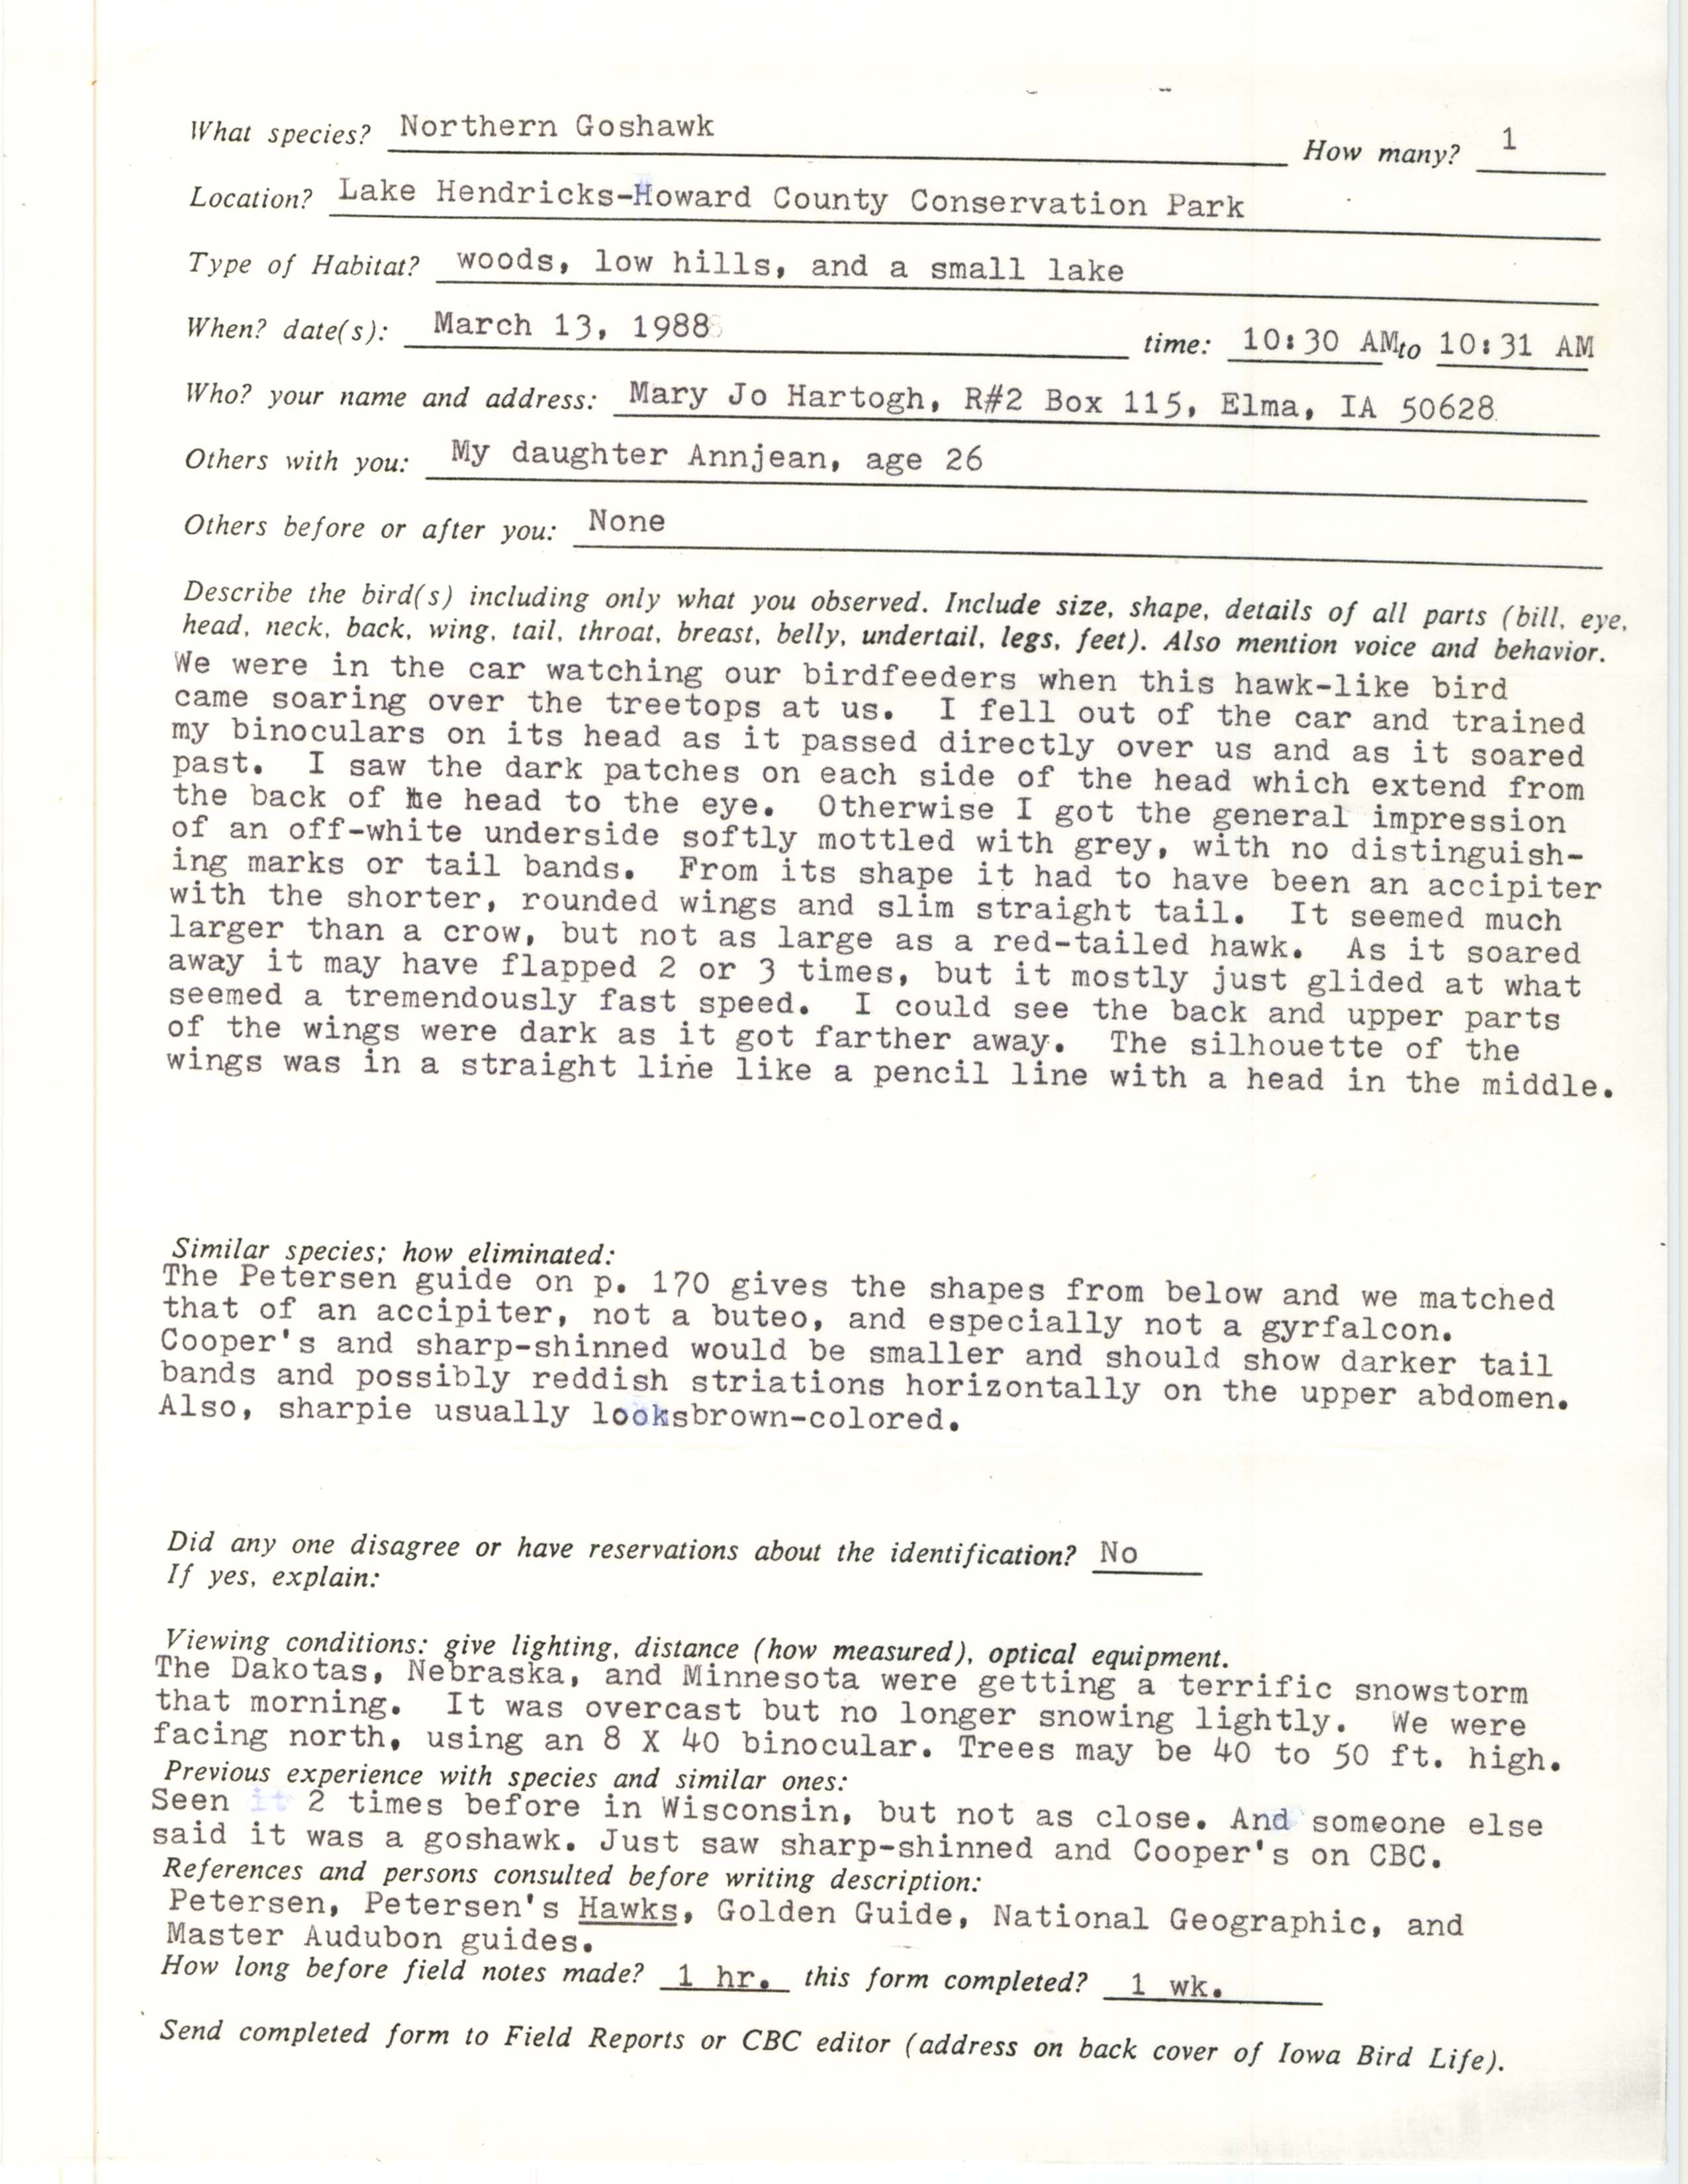 Rare bird documentation form for Northern Goshawk at Lake Hendricks, 1988